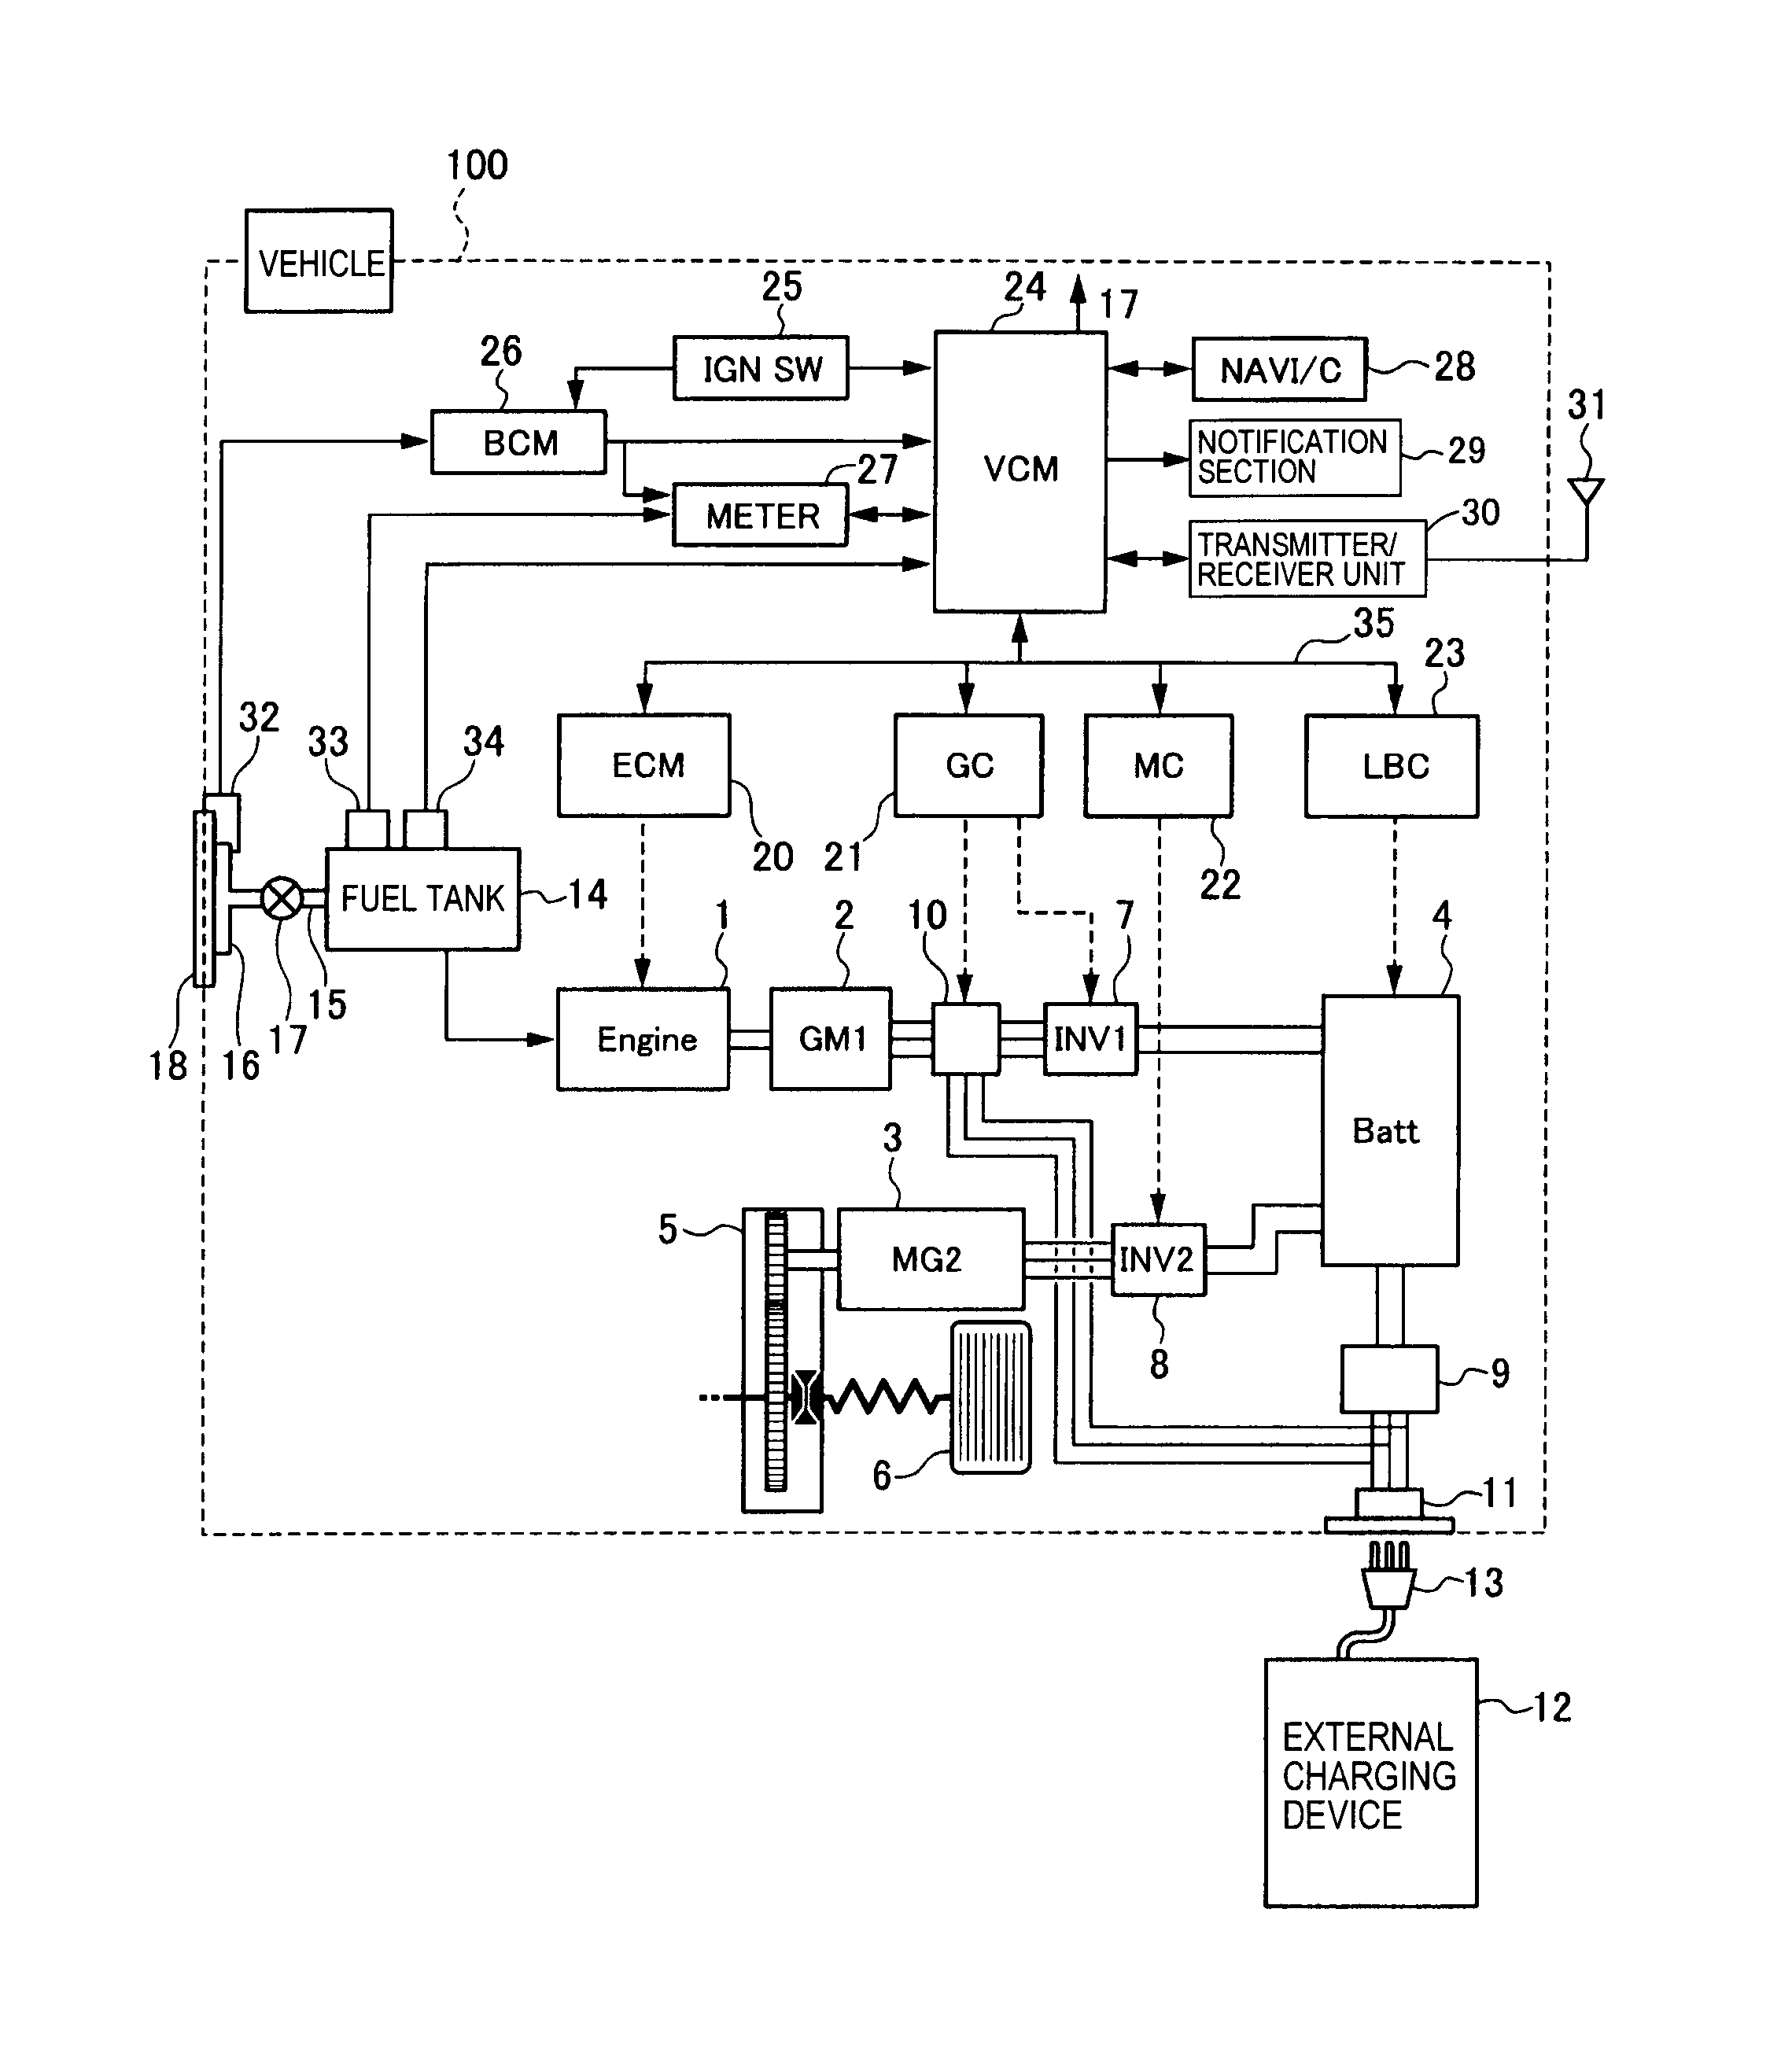 1998 F4i Fuel Pump Wiring Diagram